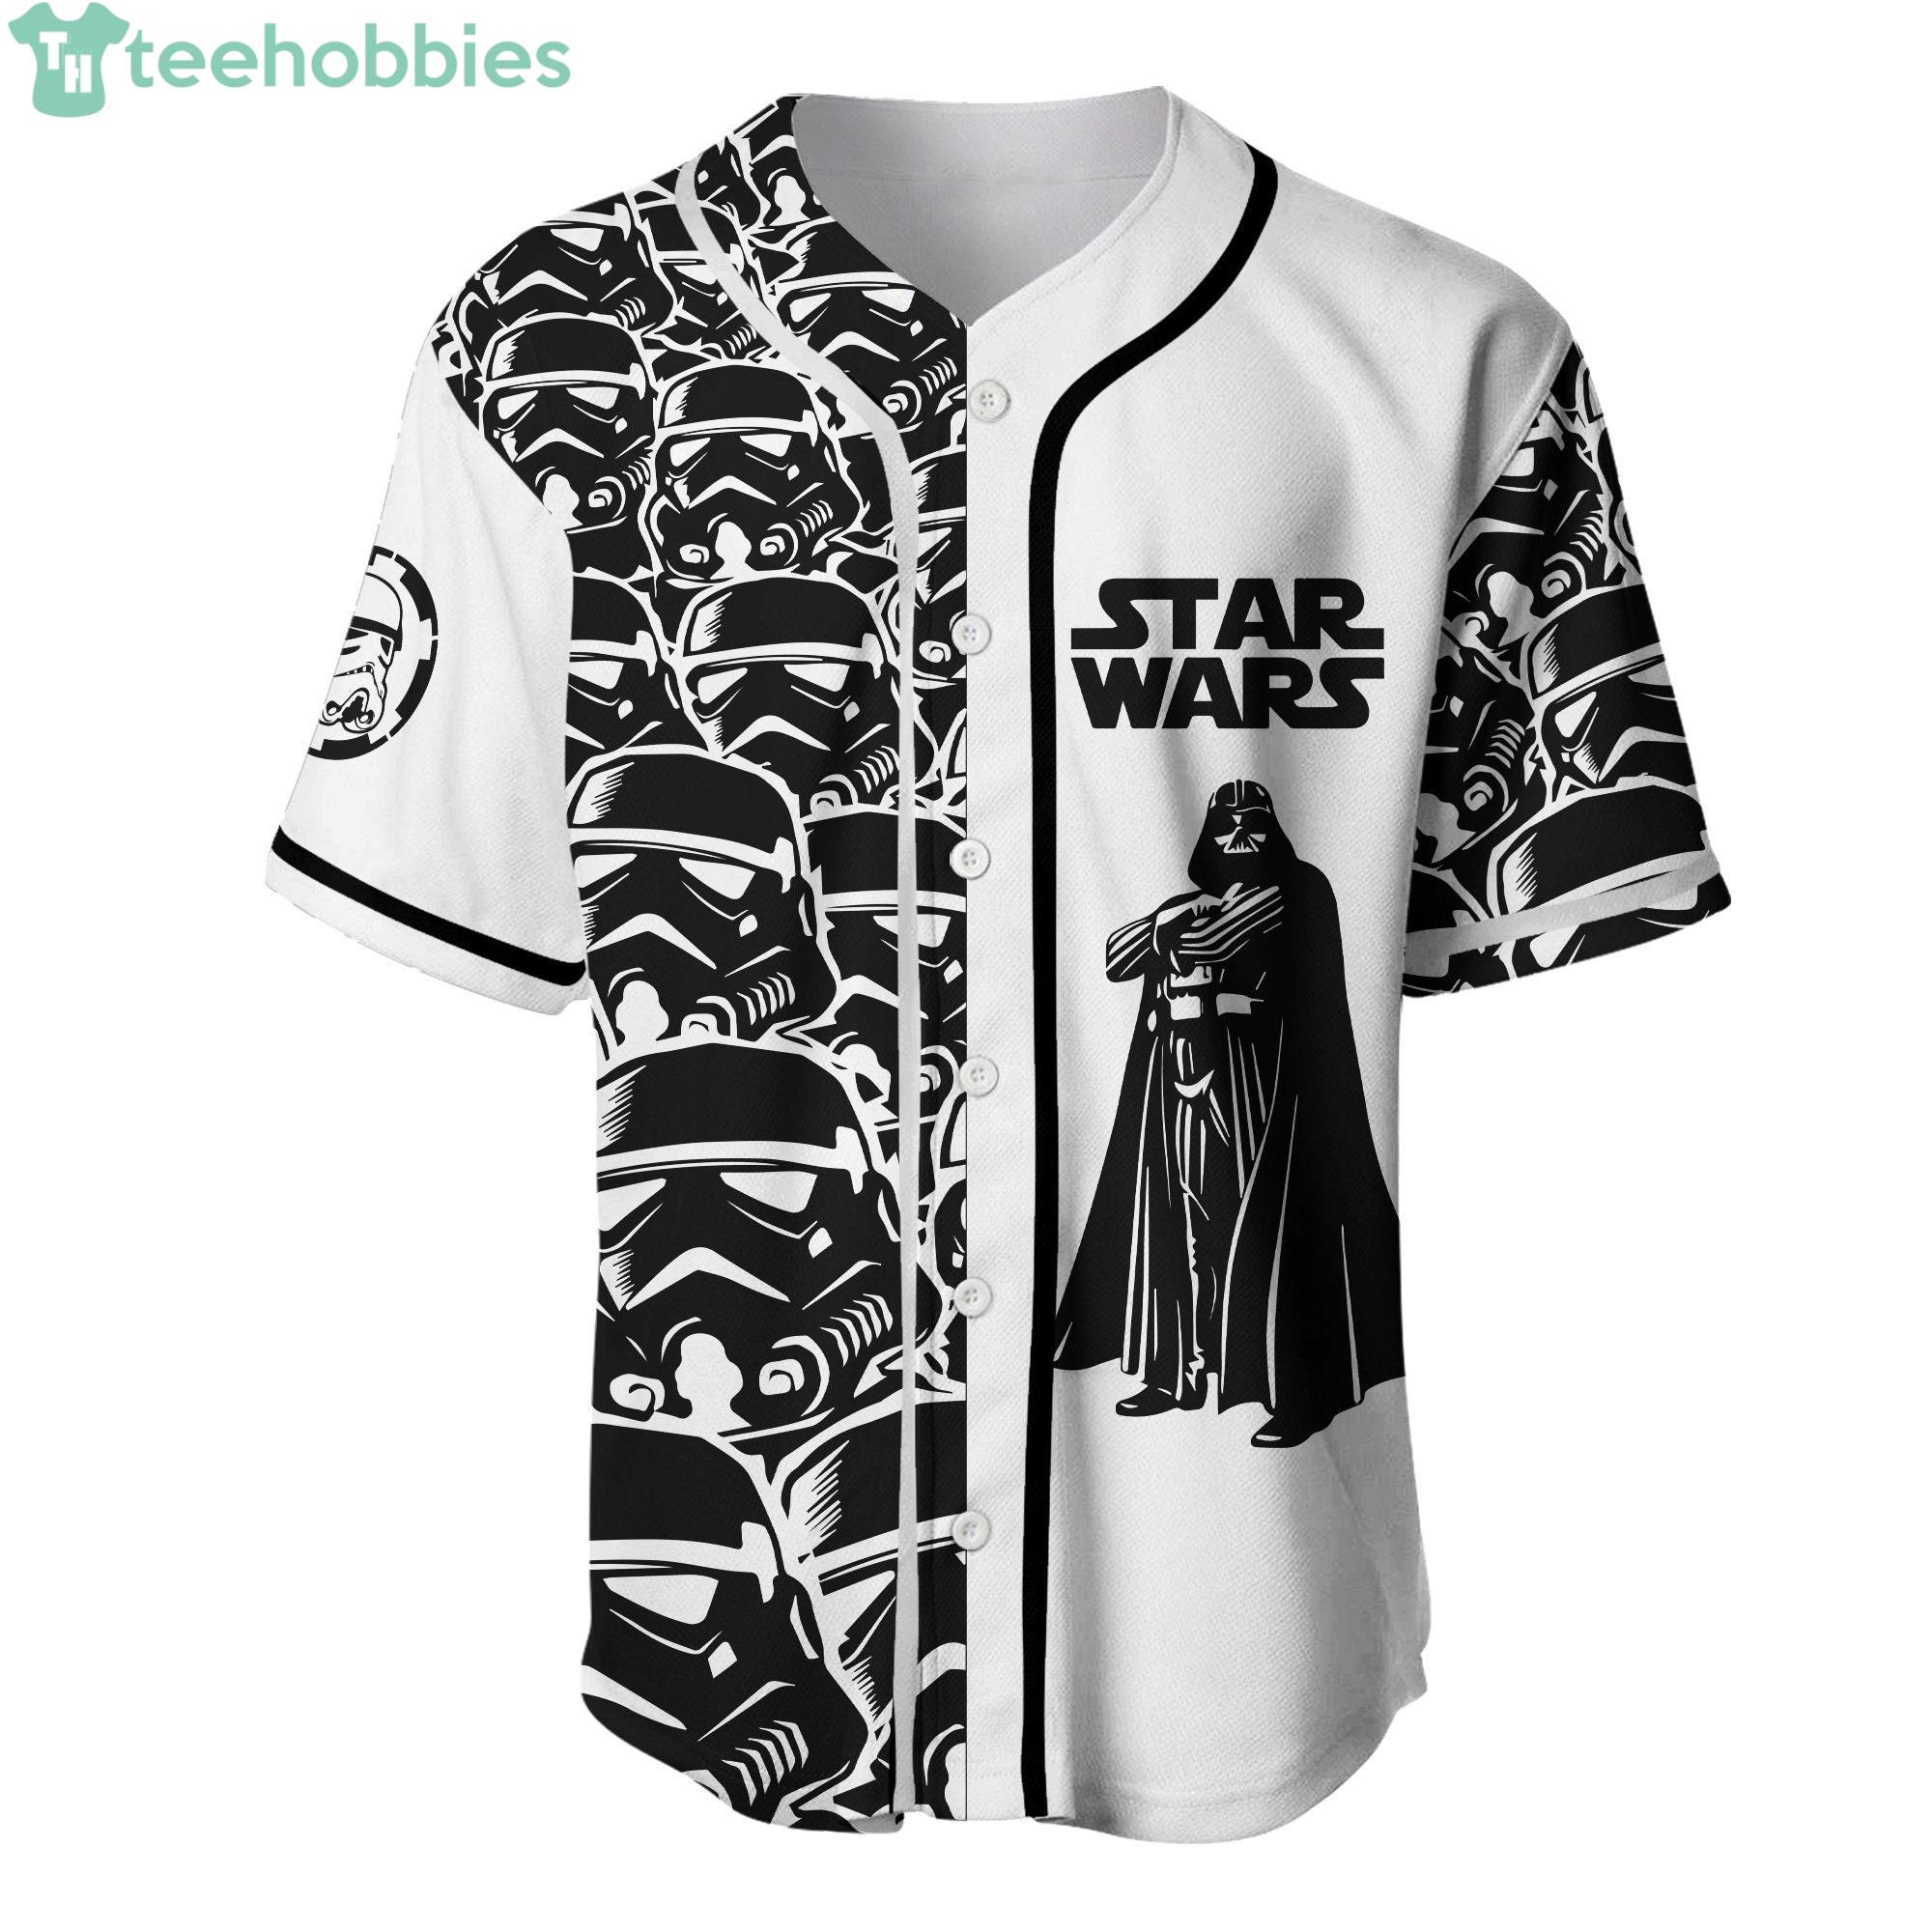 Star Wars Baseball Jerseys merch, clothing & apparel - Anime Ape